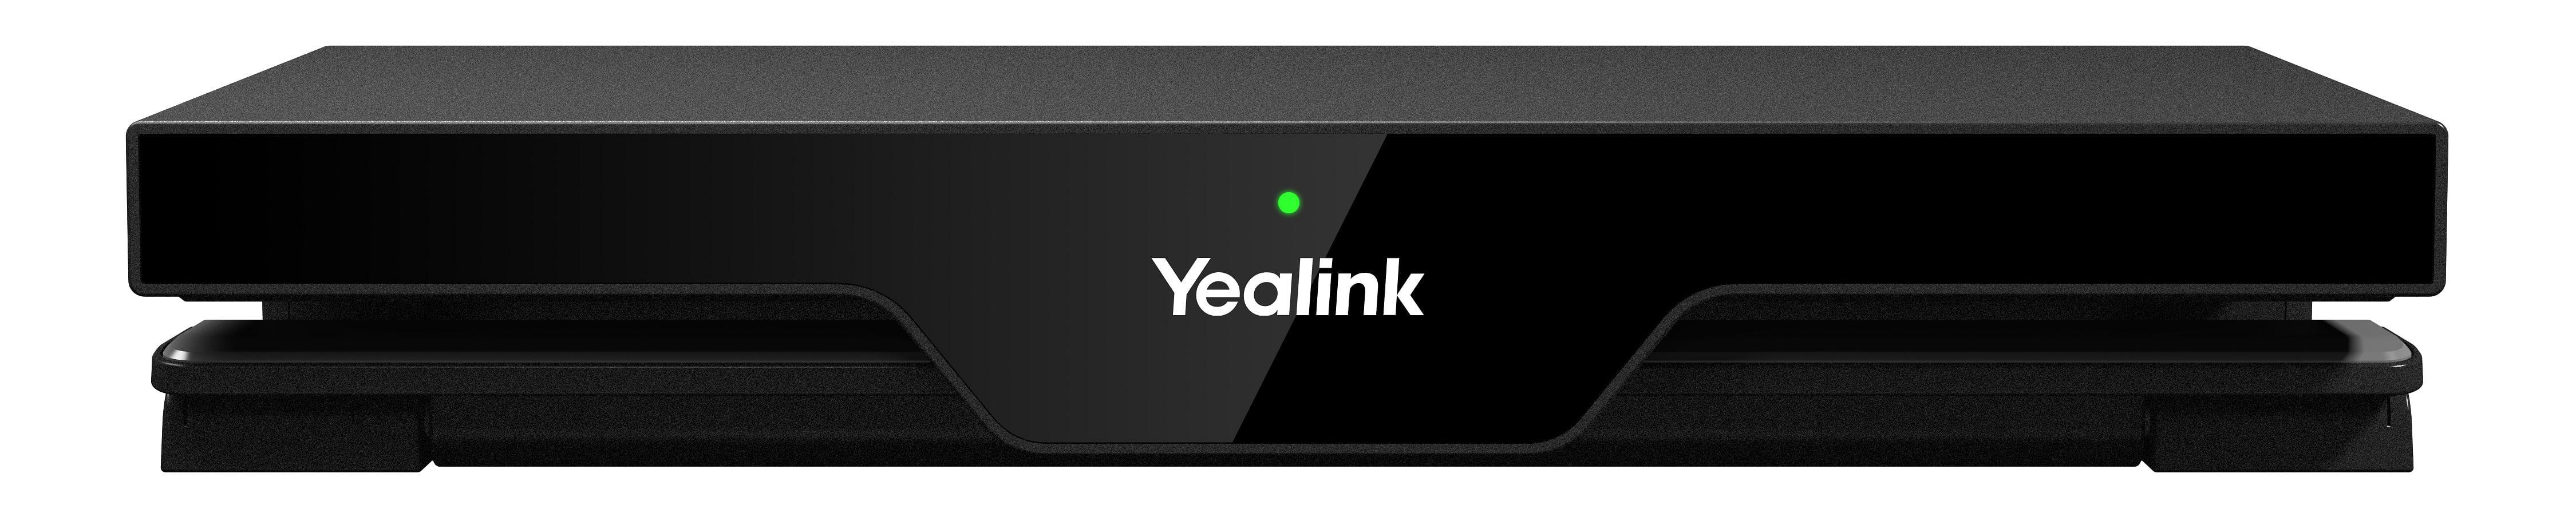 Yealink Wireless Presentation & Collab System [RoomCast]